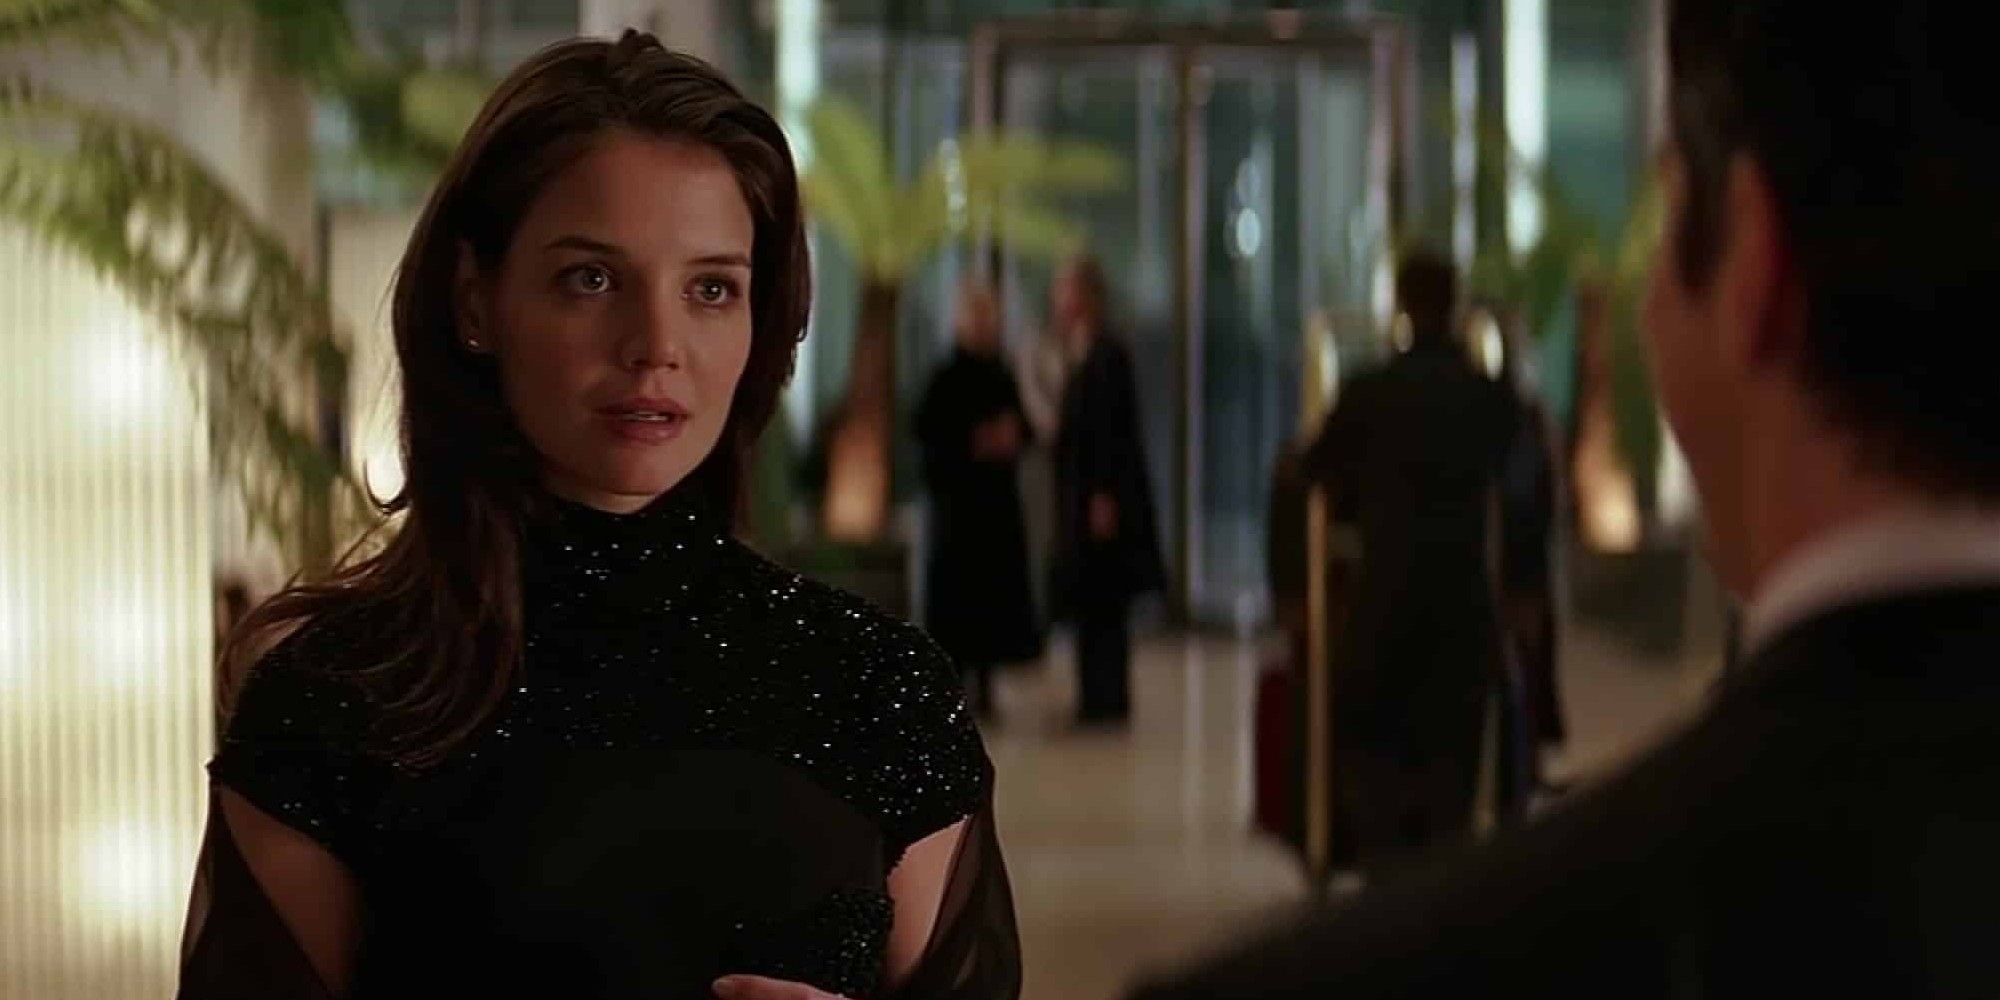 The Dark Knight: Why Maggie Gyllenhaal Replaced Katie Holmes as Rachel  Dawes in the Batman Film